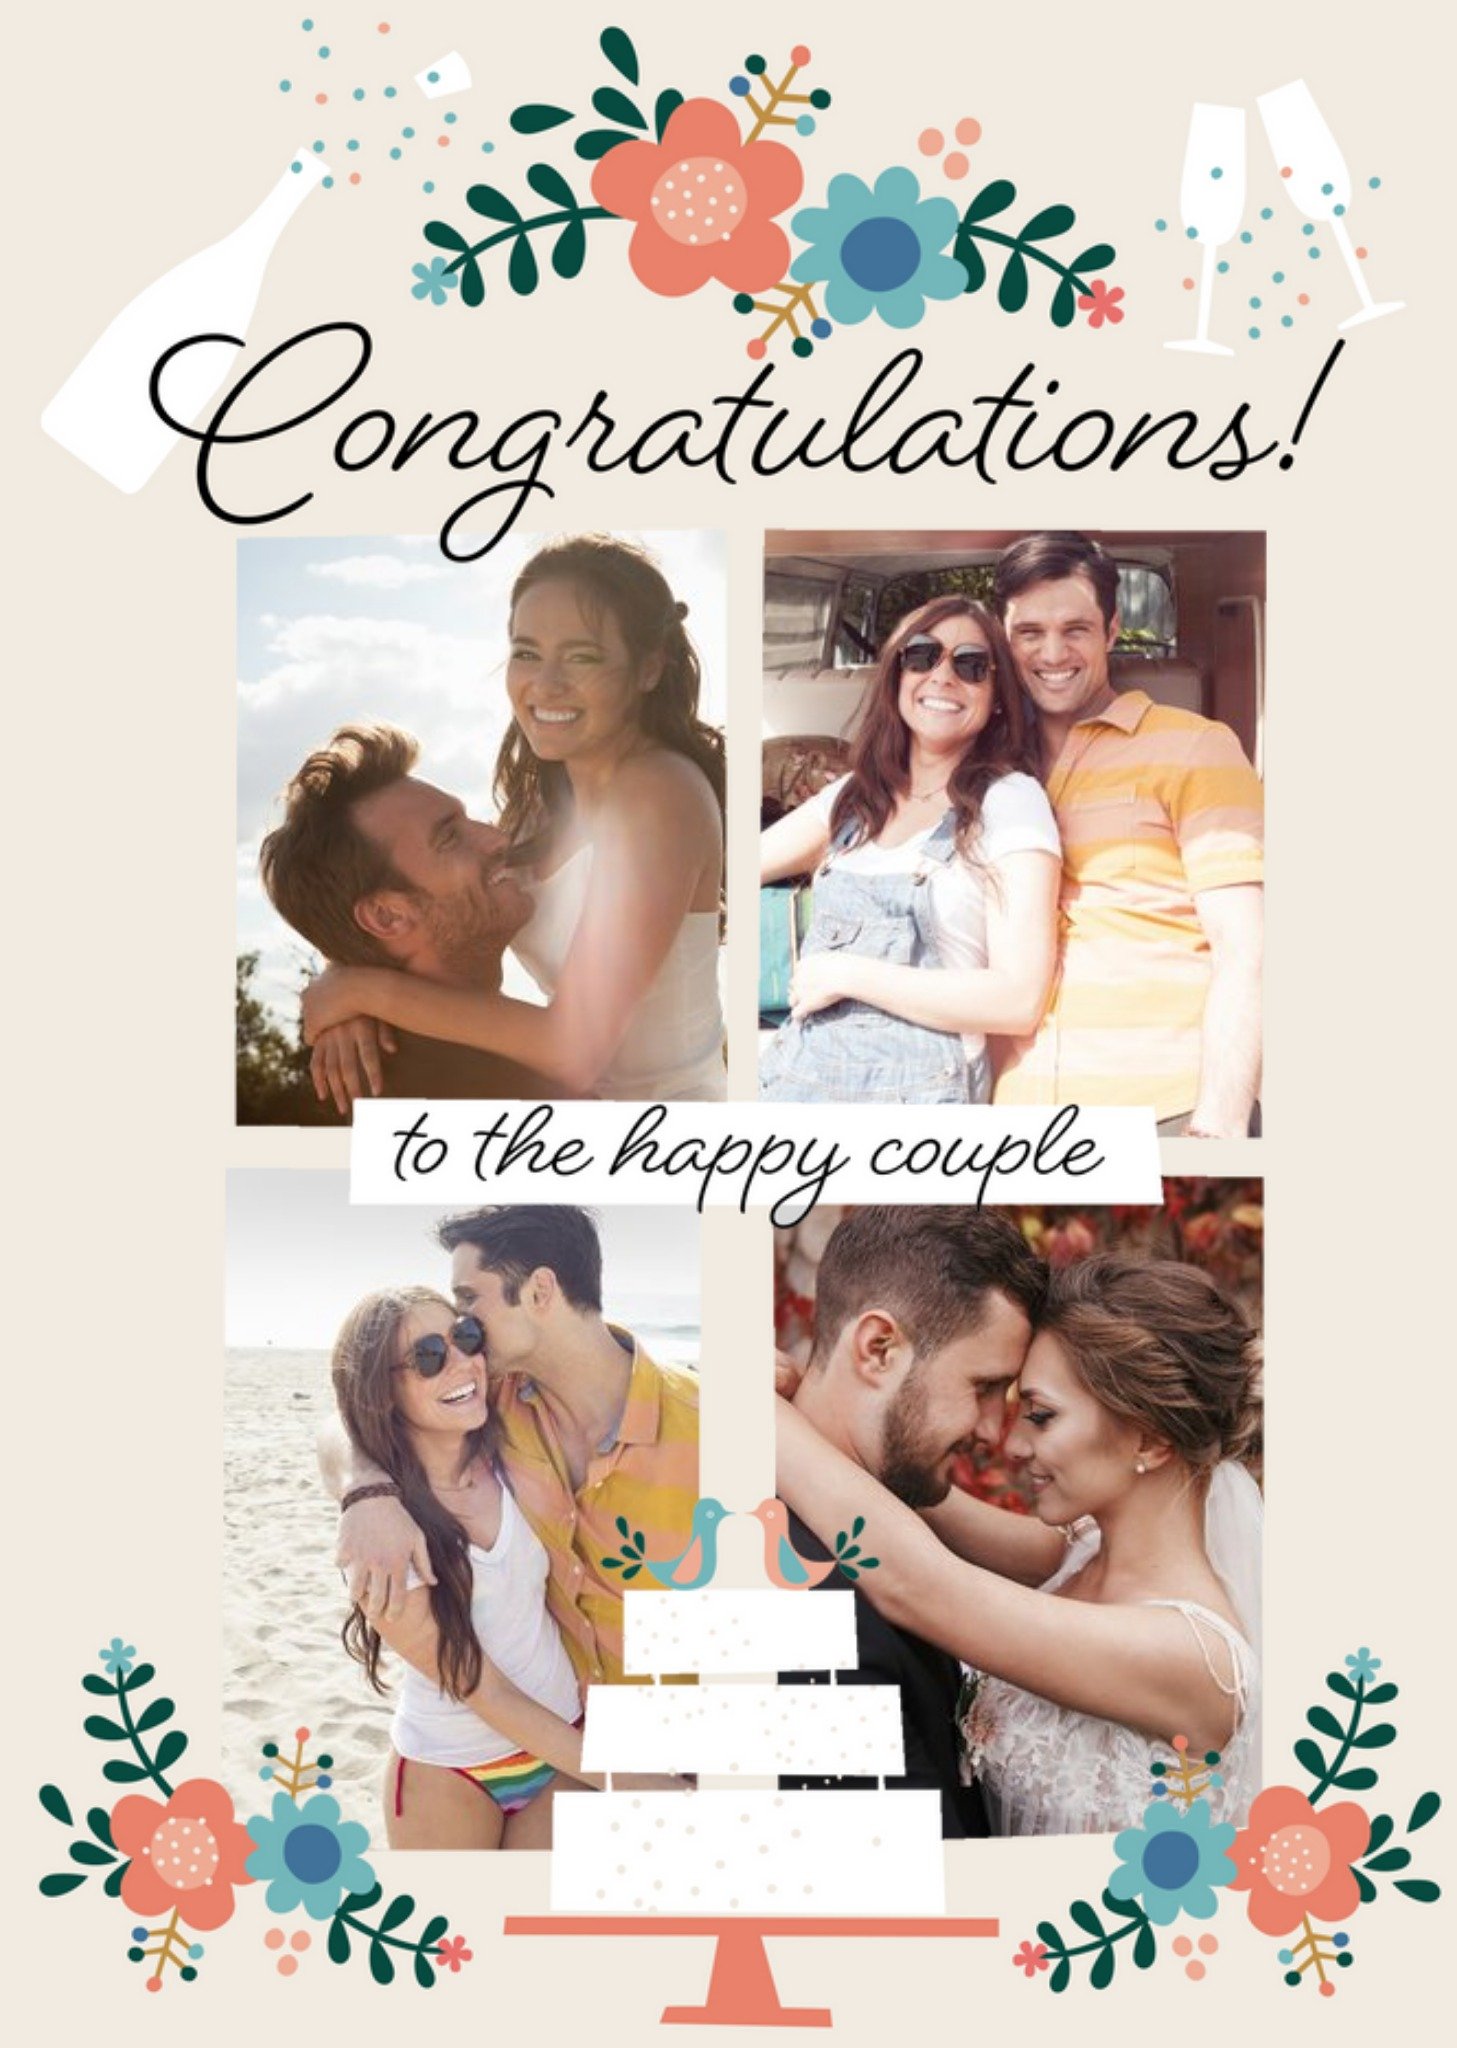 Moonpig Typographic Floral Design Congratulations To The Happy Couple Wedding Photo Upload Card Ecar